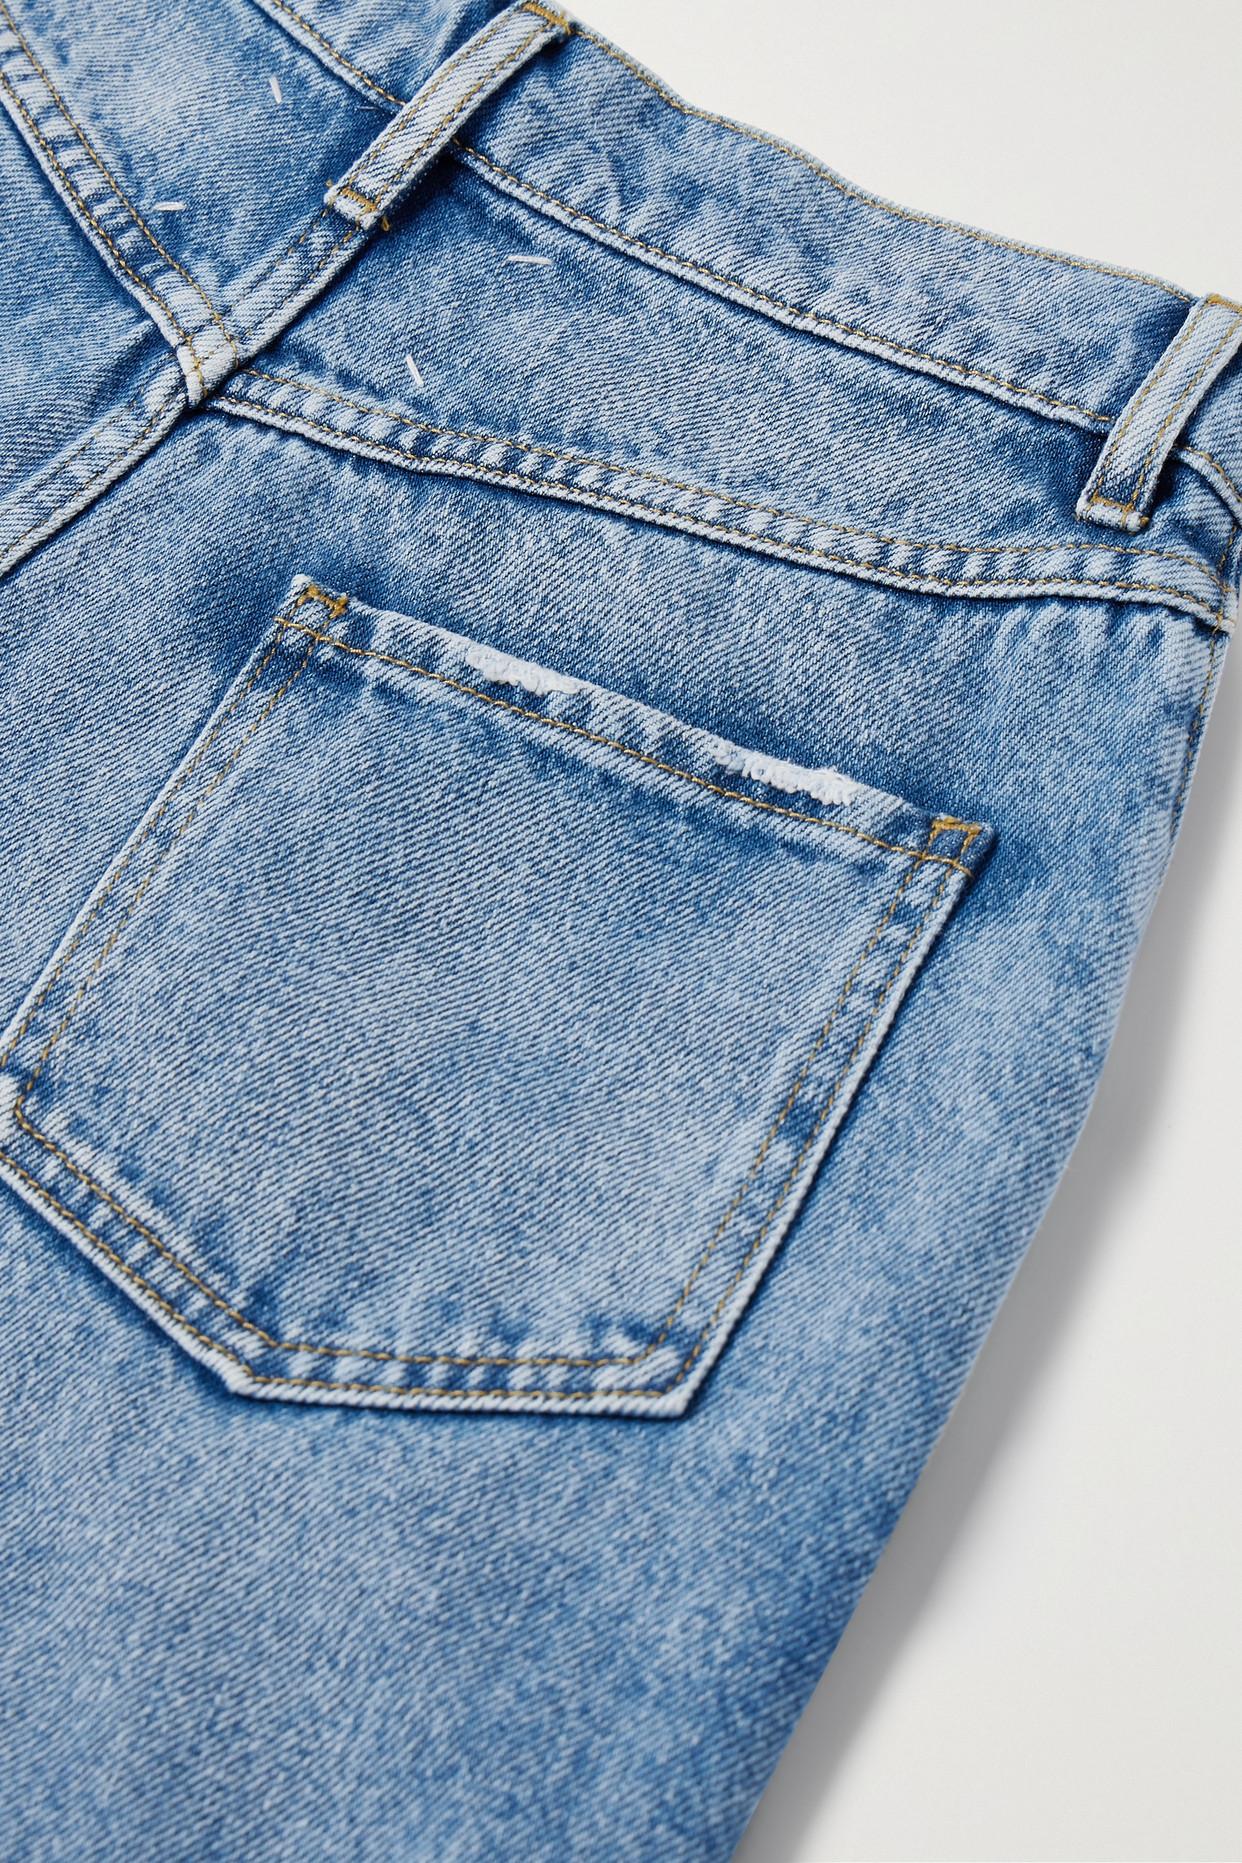 Cutout high-rise wide-leg jeans in blue - Maison Margiela